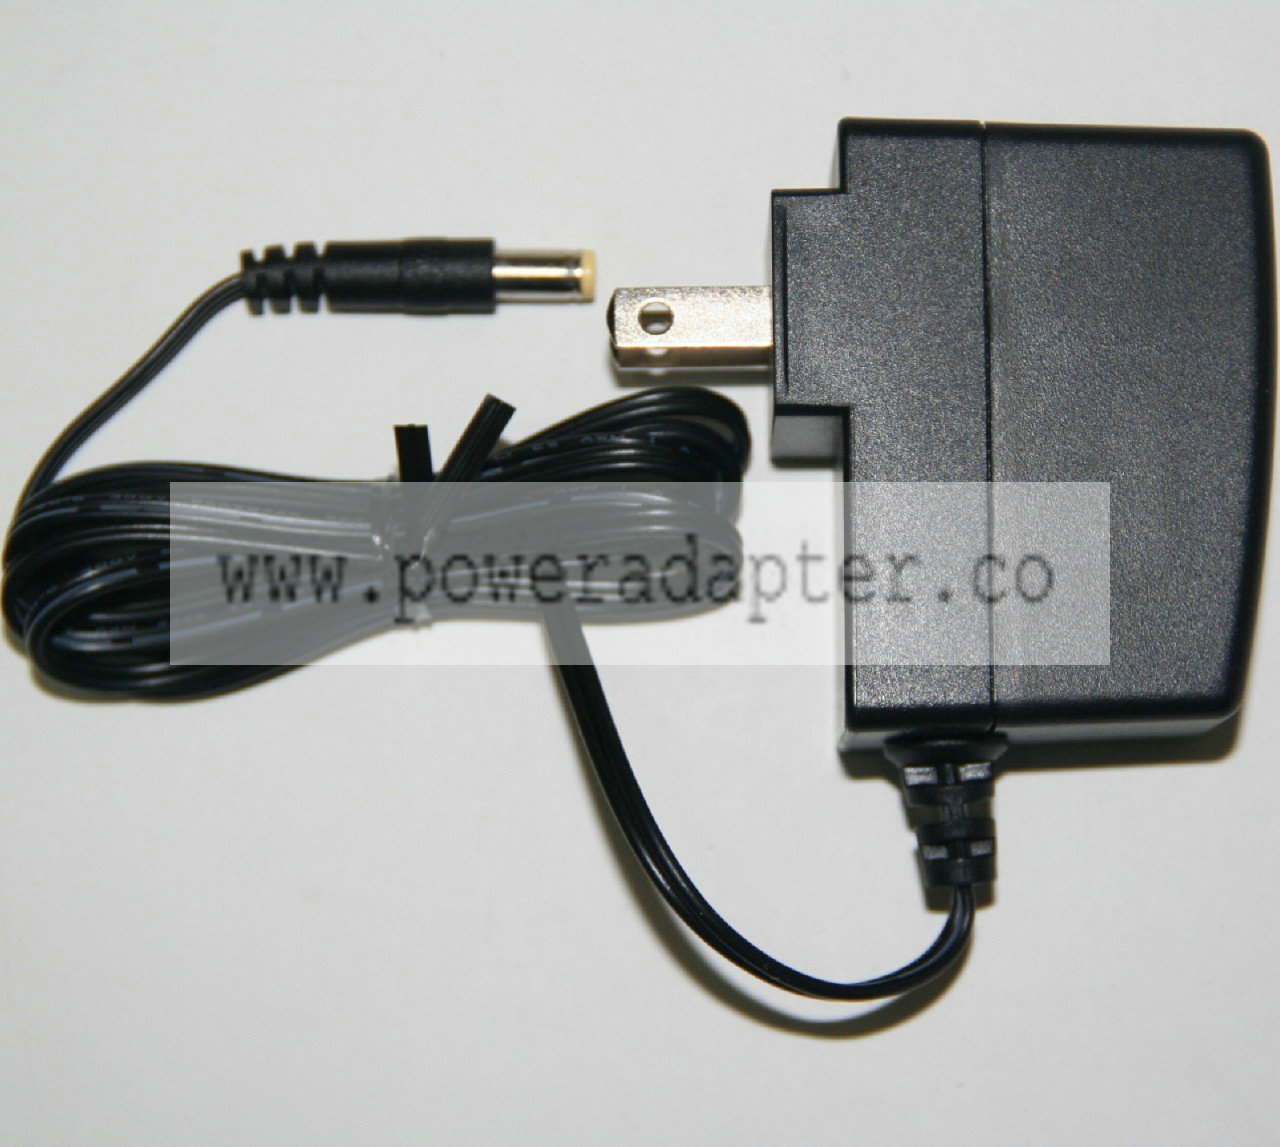 Vestax SDC-7 F/U Power Adapter Product Description SDC-7 F/U power adapter by Vestax, model SYS1381-0808-W2. 7.5v DC